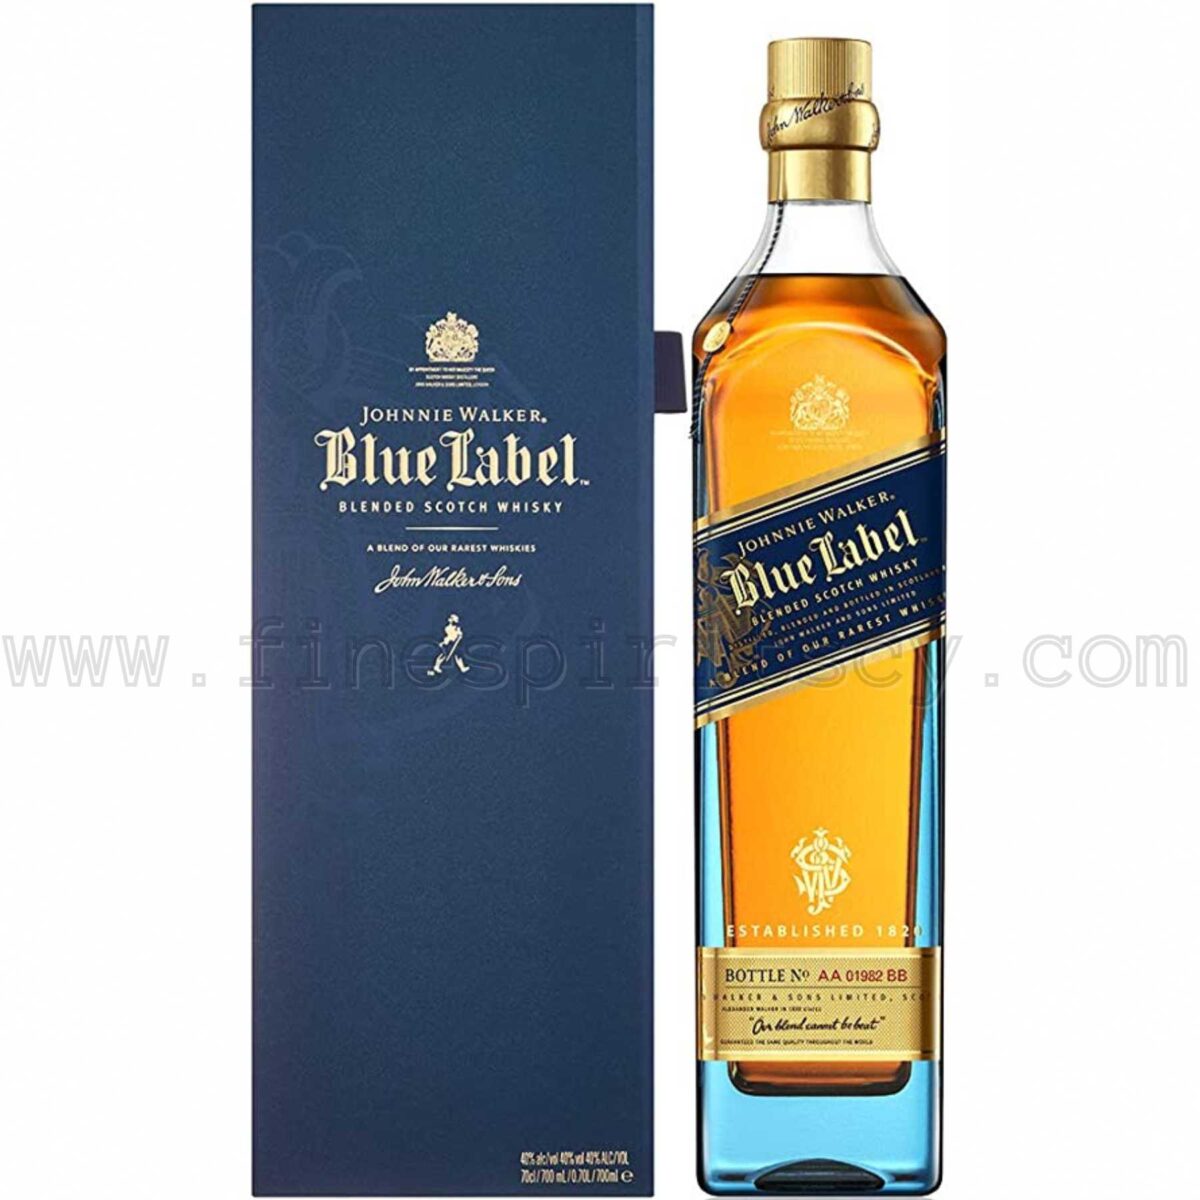 Johnnie Walker Blue Label Blended Scotch Whisky Cyprus Price 700ml 70cl 0.7L